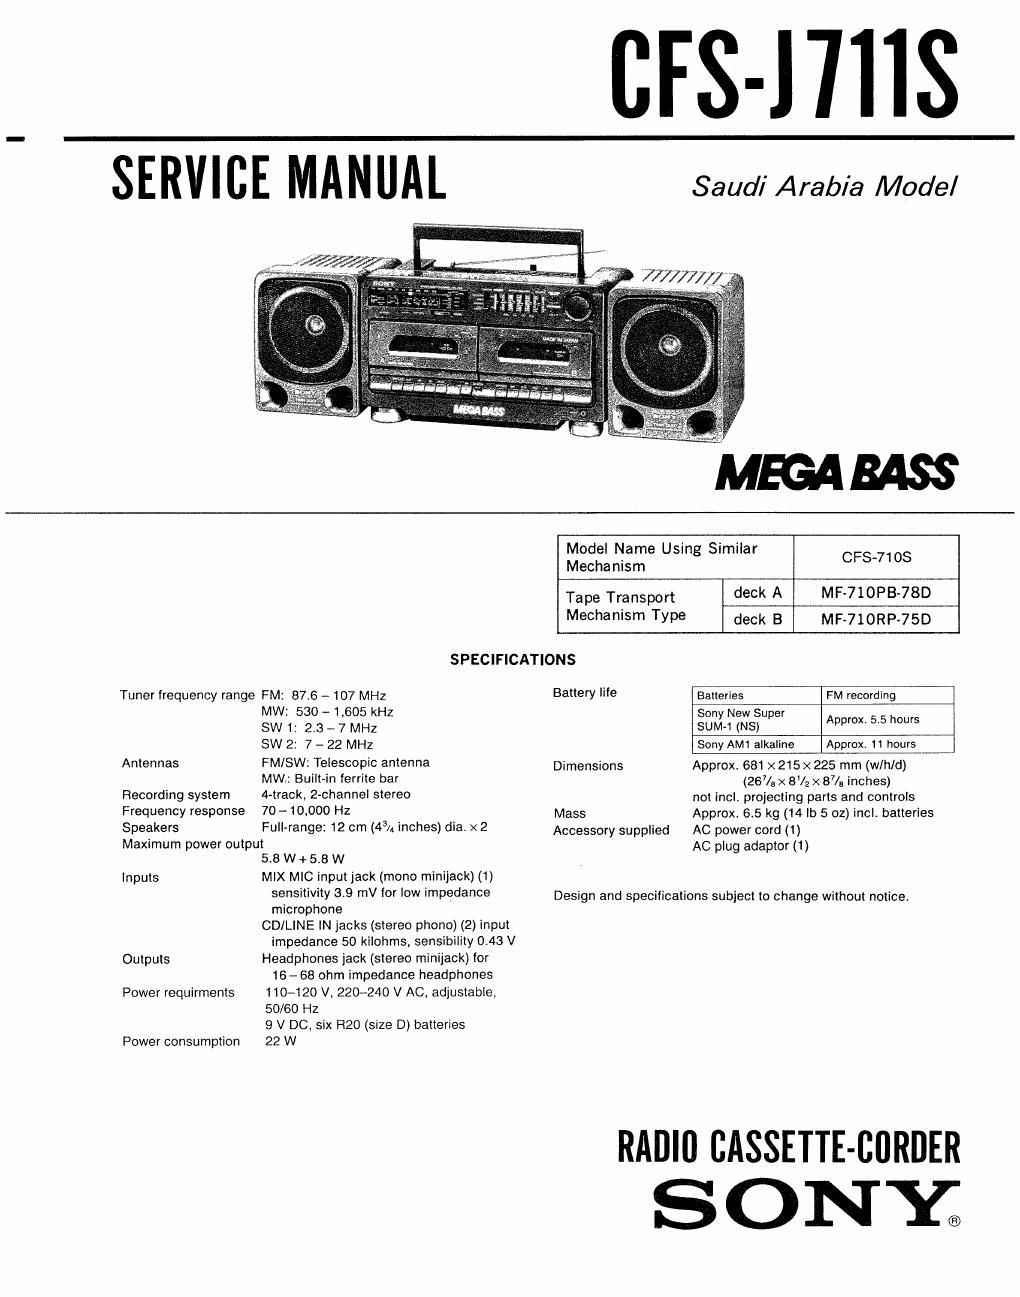 sony cfs j 711 s service manual